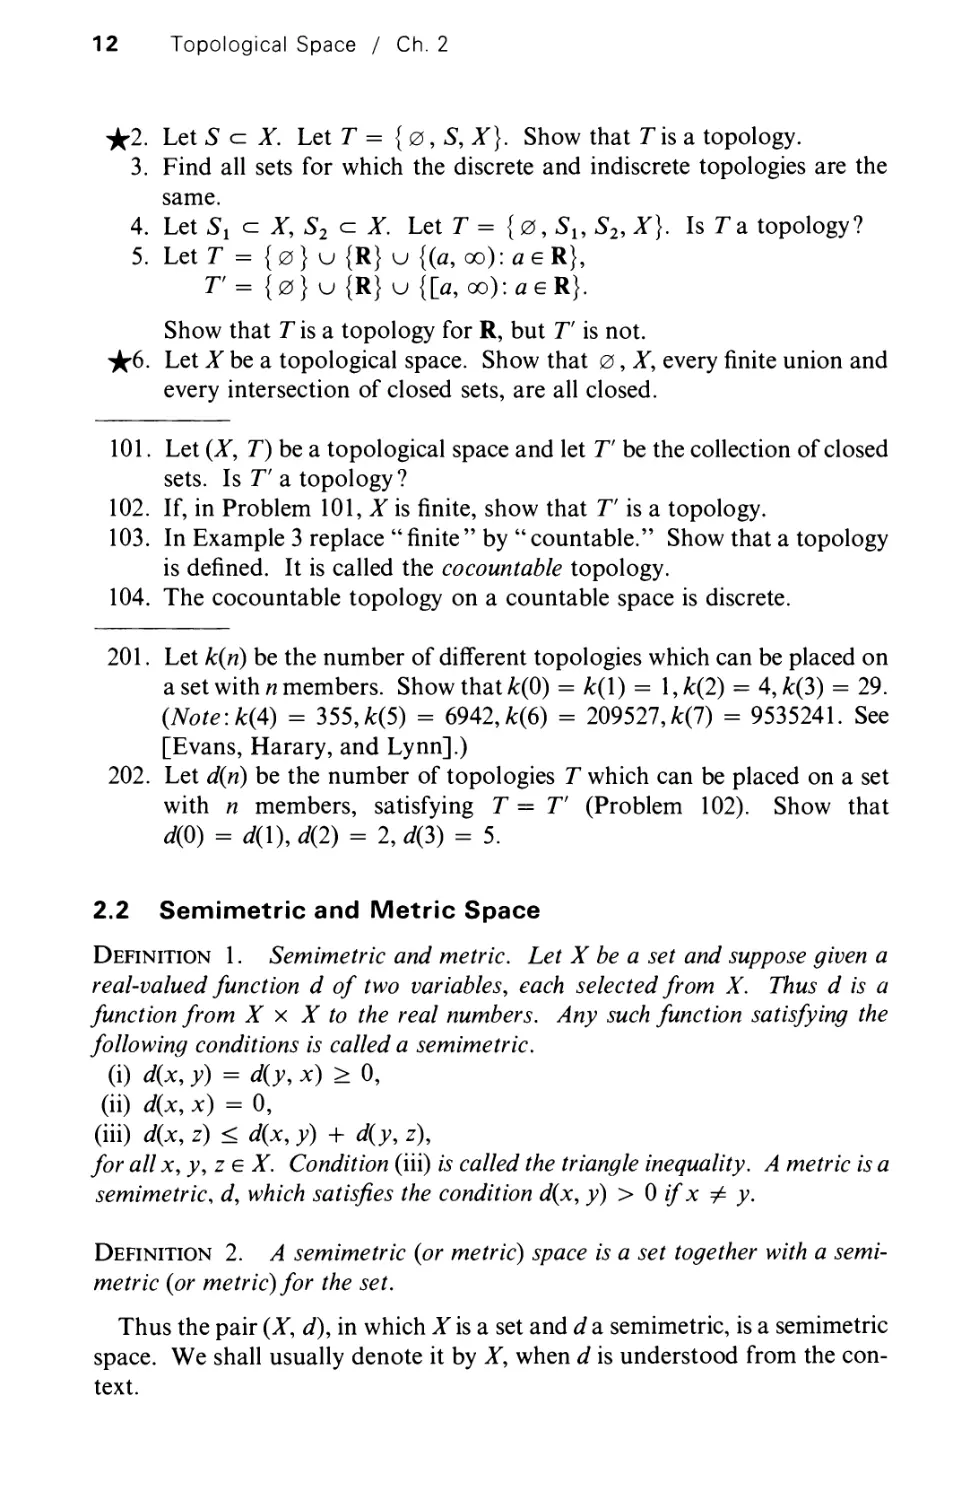 2.2 Semimetric and metric space  12